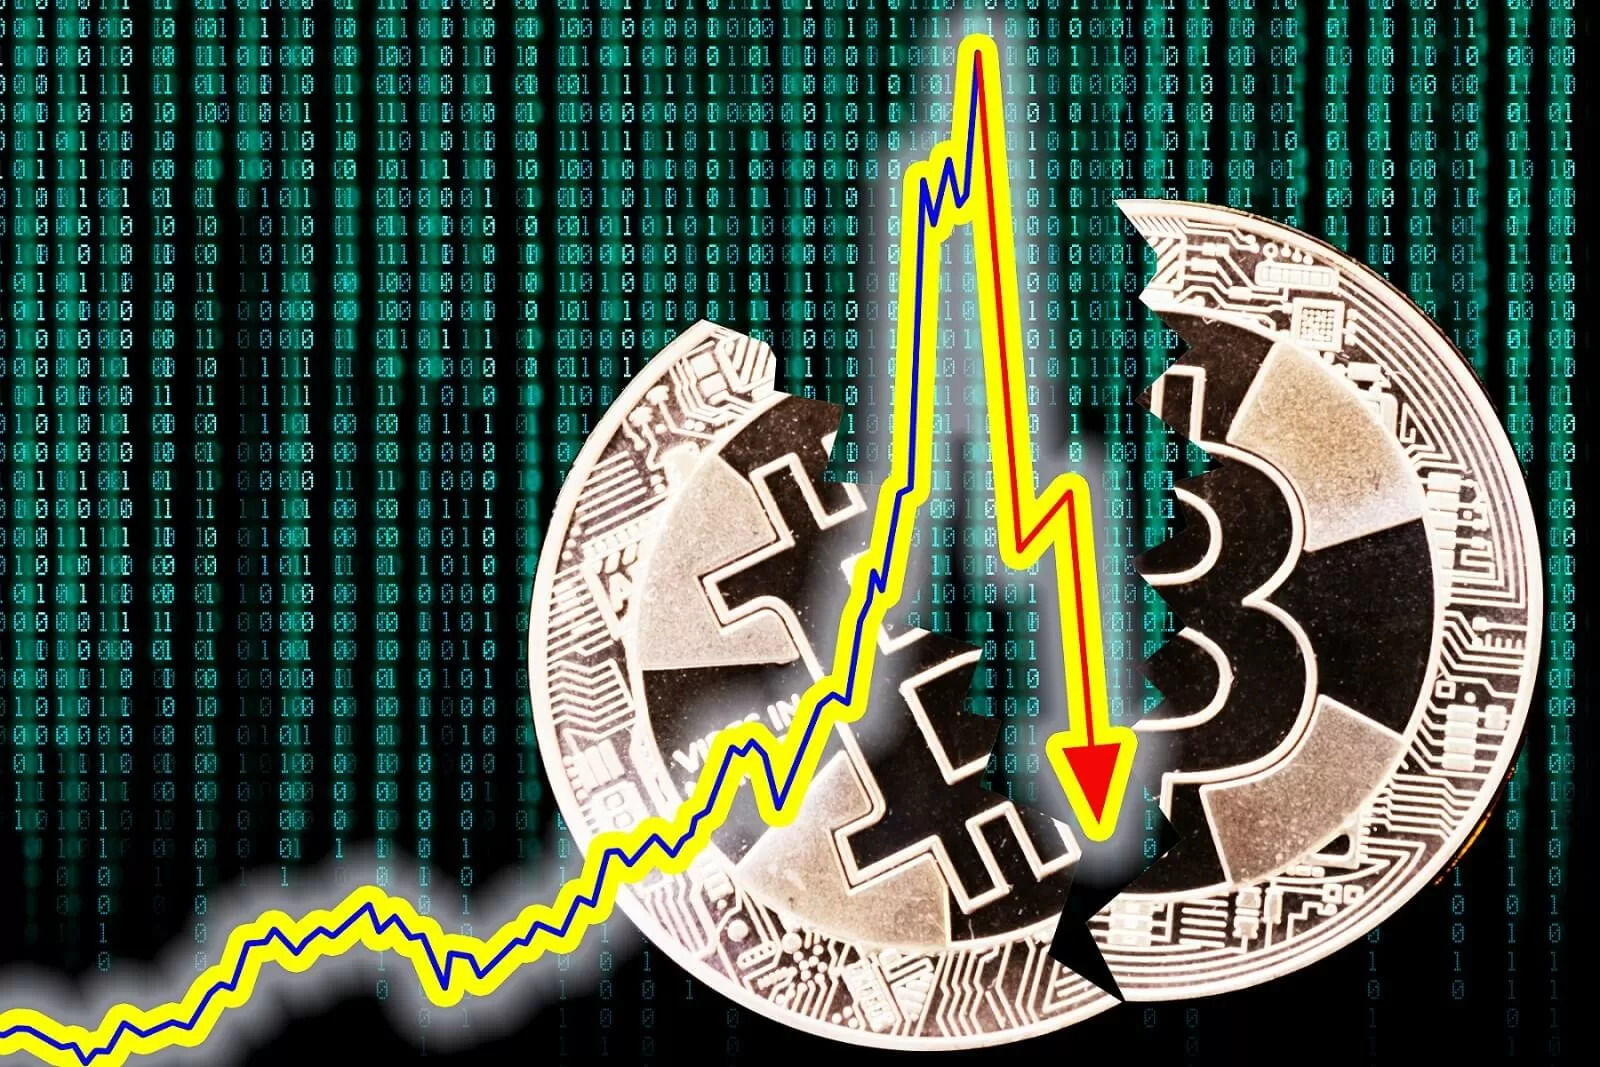 Famed crypto millionaire says Bitcoin is dead